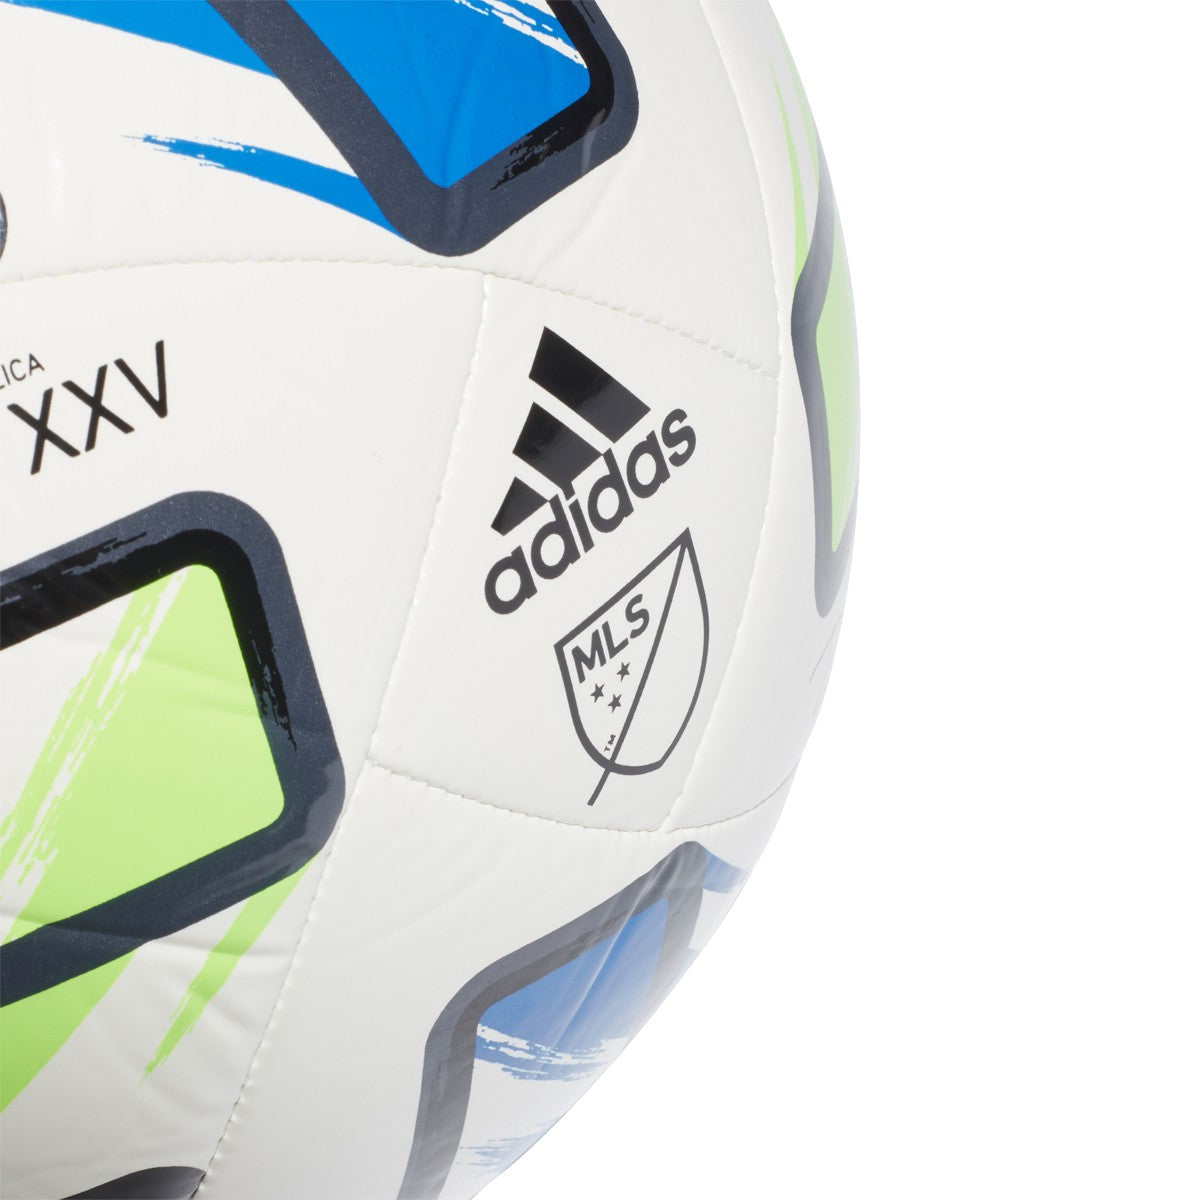 adidas mls 2020 club soccer ball